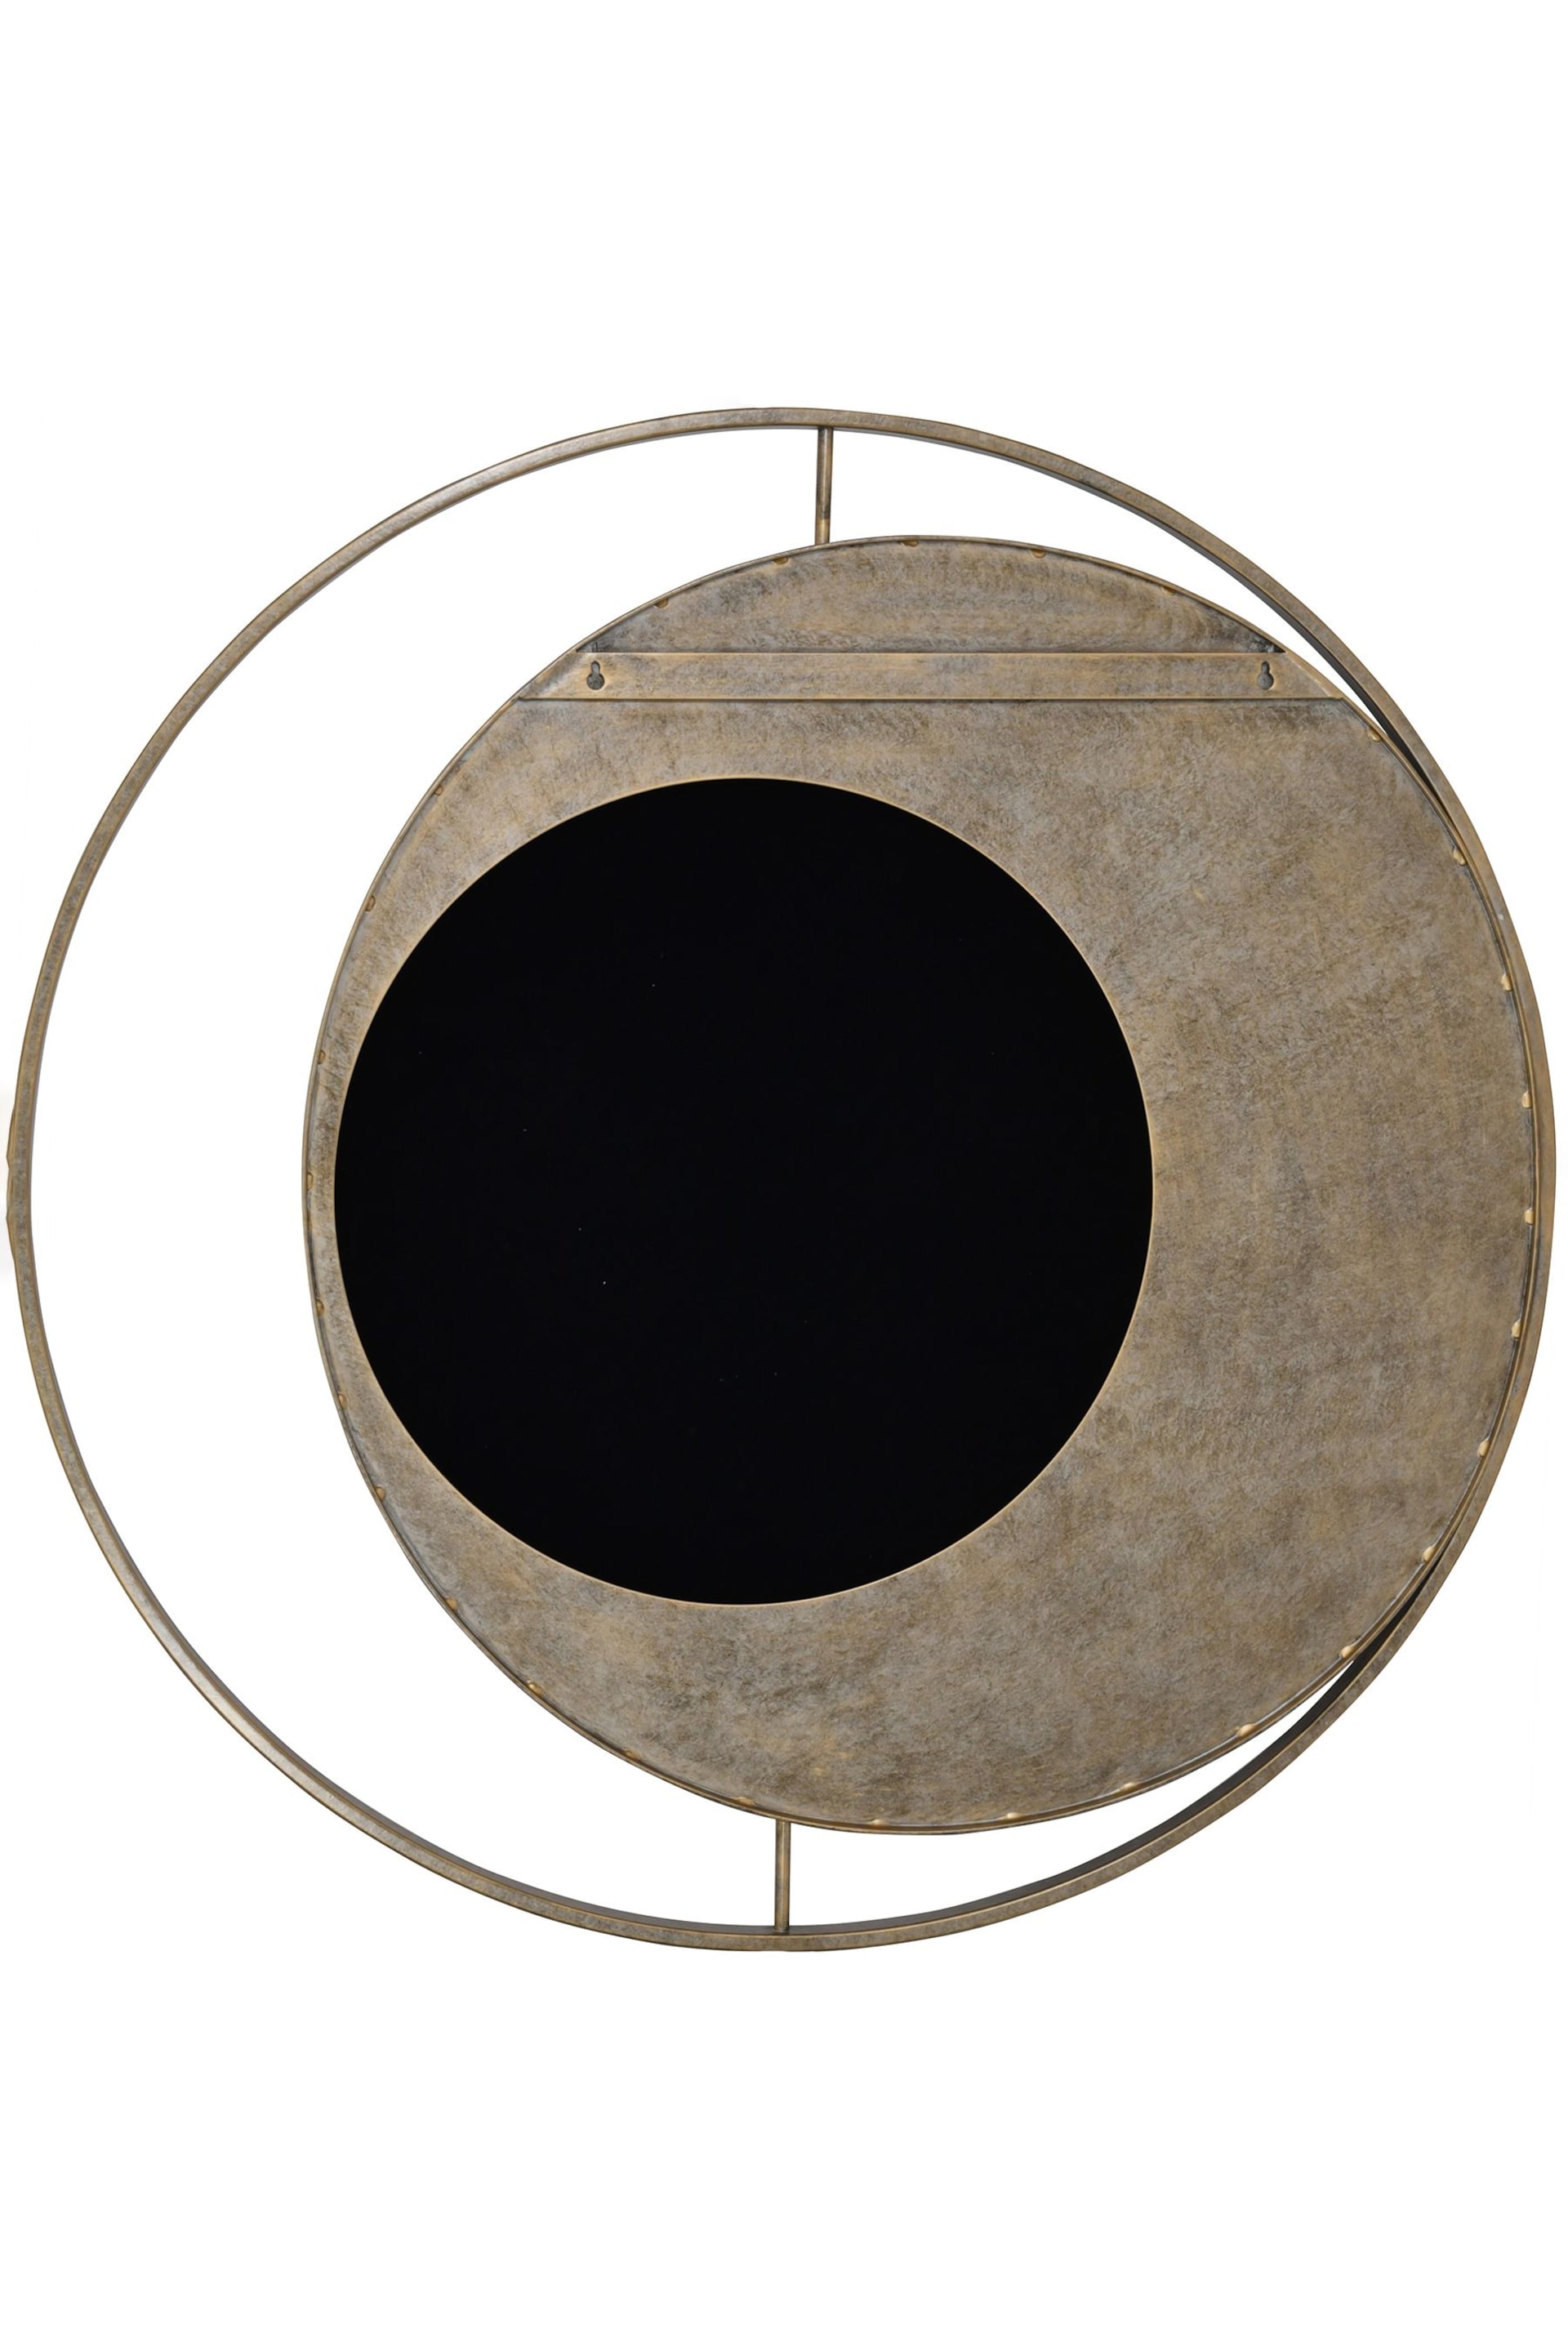 Libra Gold Concentric Circles Iron Mirror 100cm - Image 3 of 3